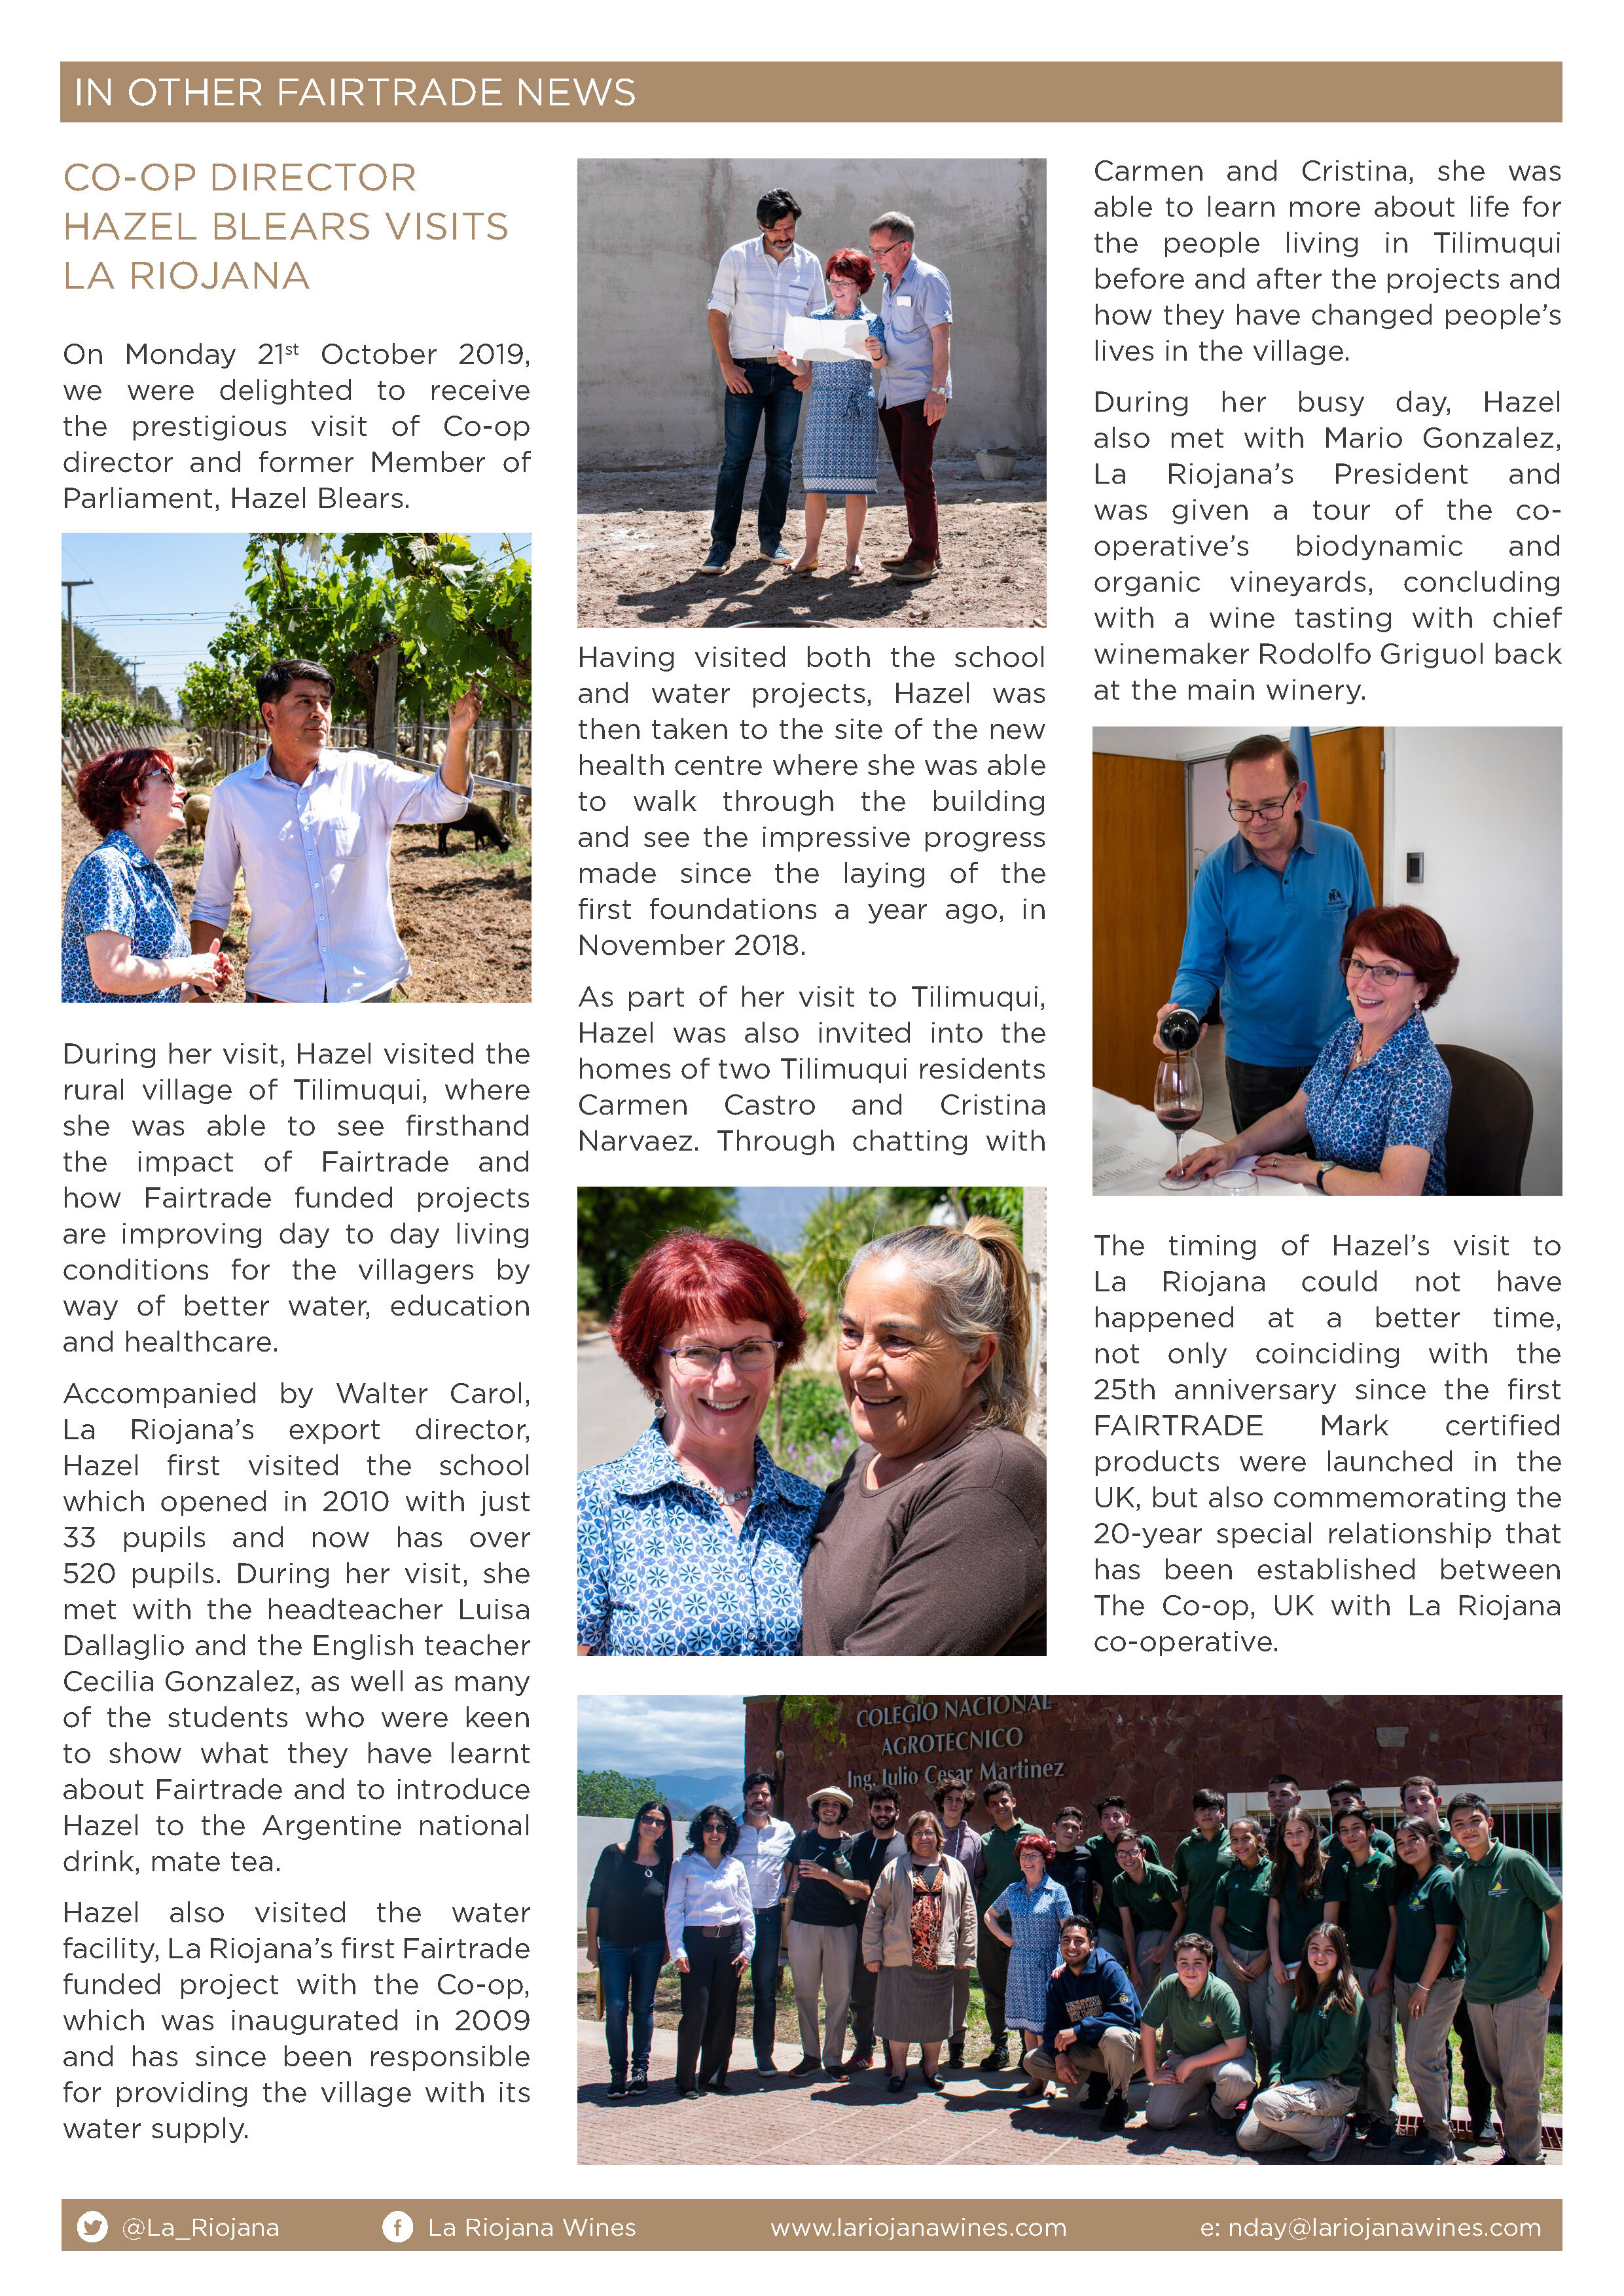 La Riojana - Fairtrade Project News - November 2019_Page_3.jpg